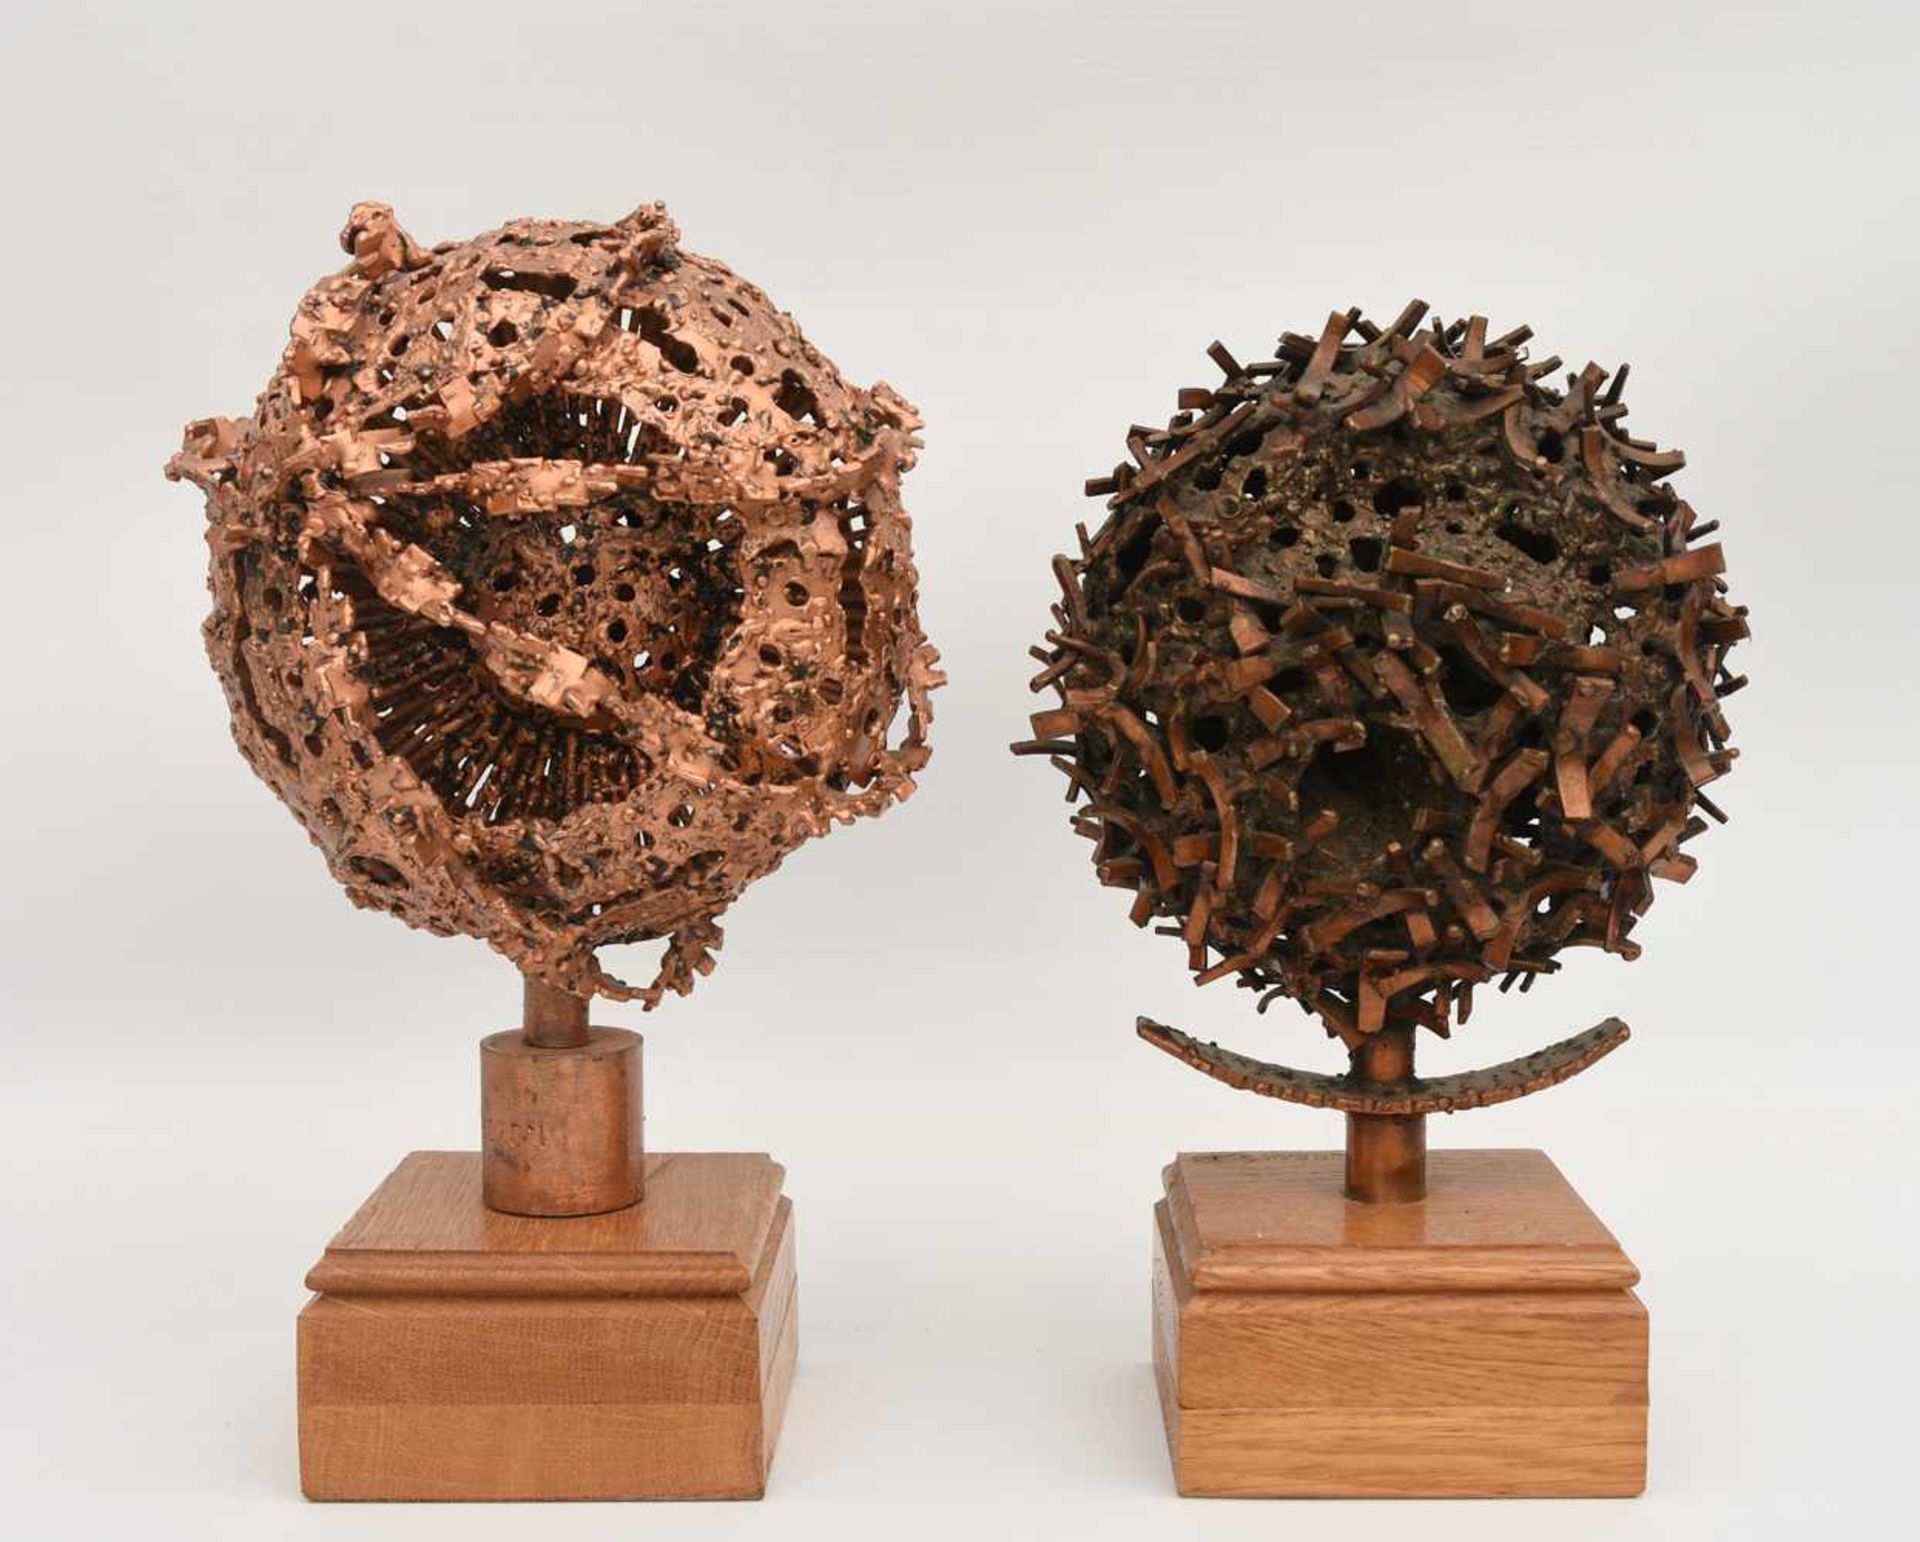 I.DVORAK, "Zwei Bäume", Skulpturen aus Kupfer/Eisen auf Holz, bezeichnet und datiert Zwei aus